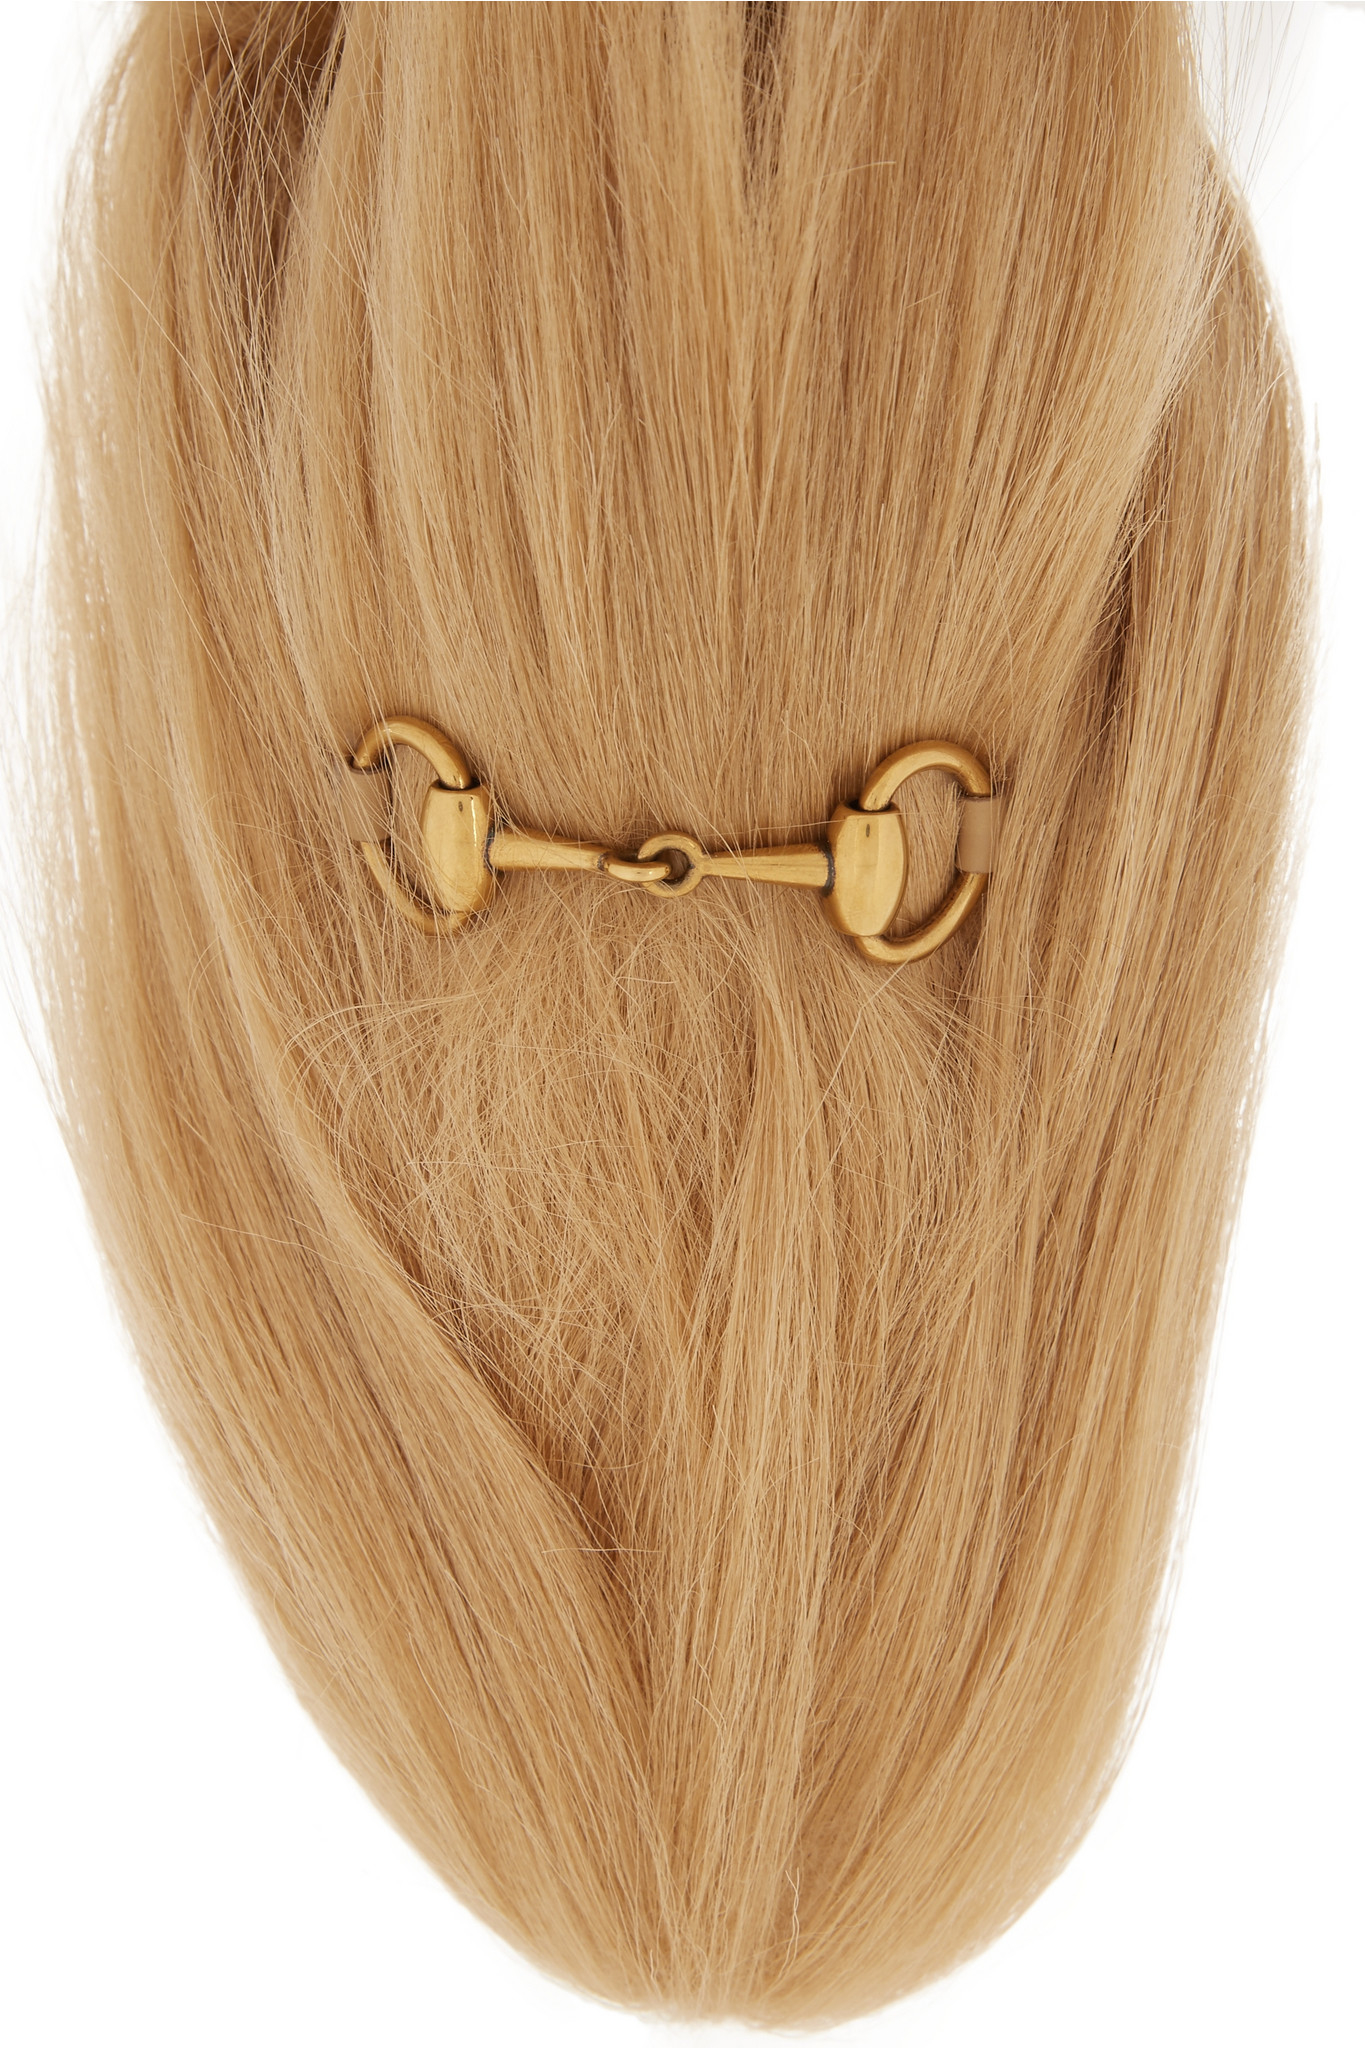 Gucci Denim Horsebit-detailed Goat Hair Slippers in Beige (Natural) - Lyst